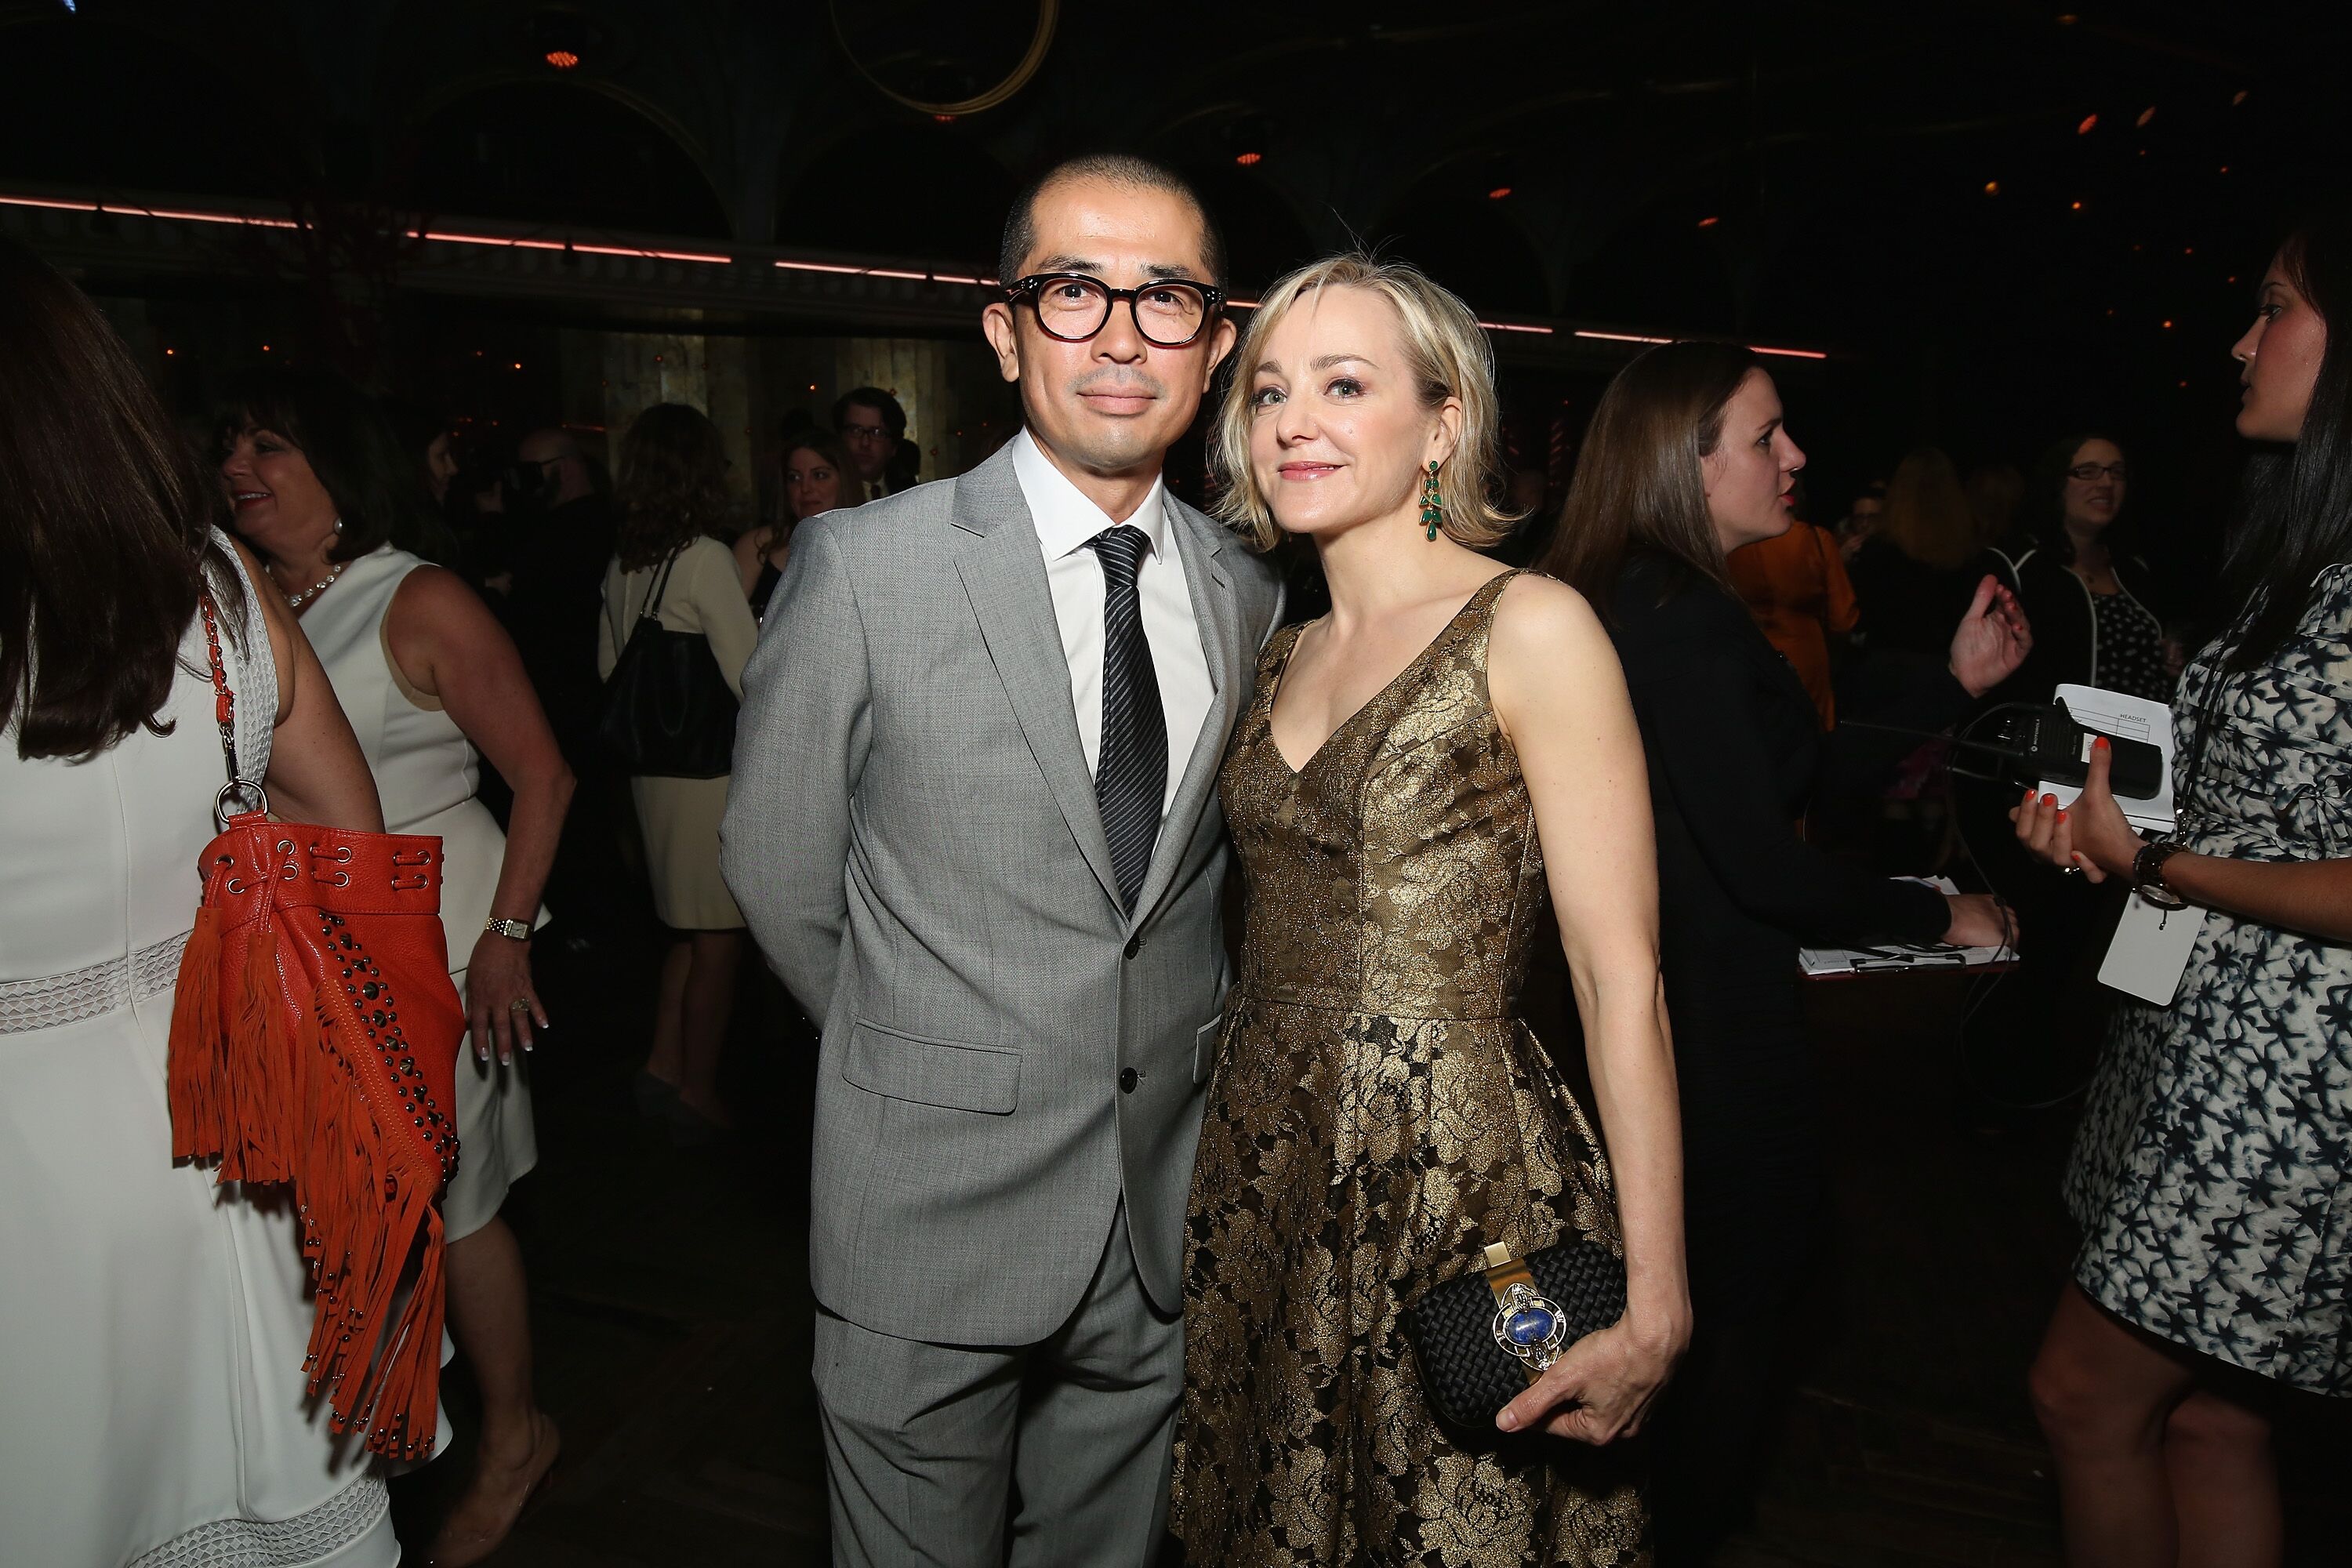 Geneva Carr at the 2015 Tony Honors in New York with ex-husband Yuji Yamazaki | Source: Getty Images